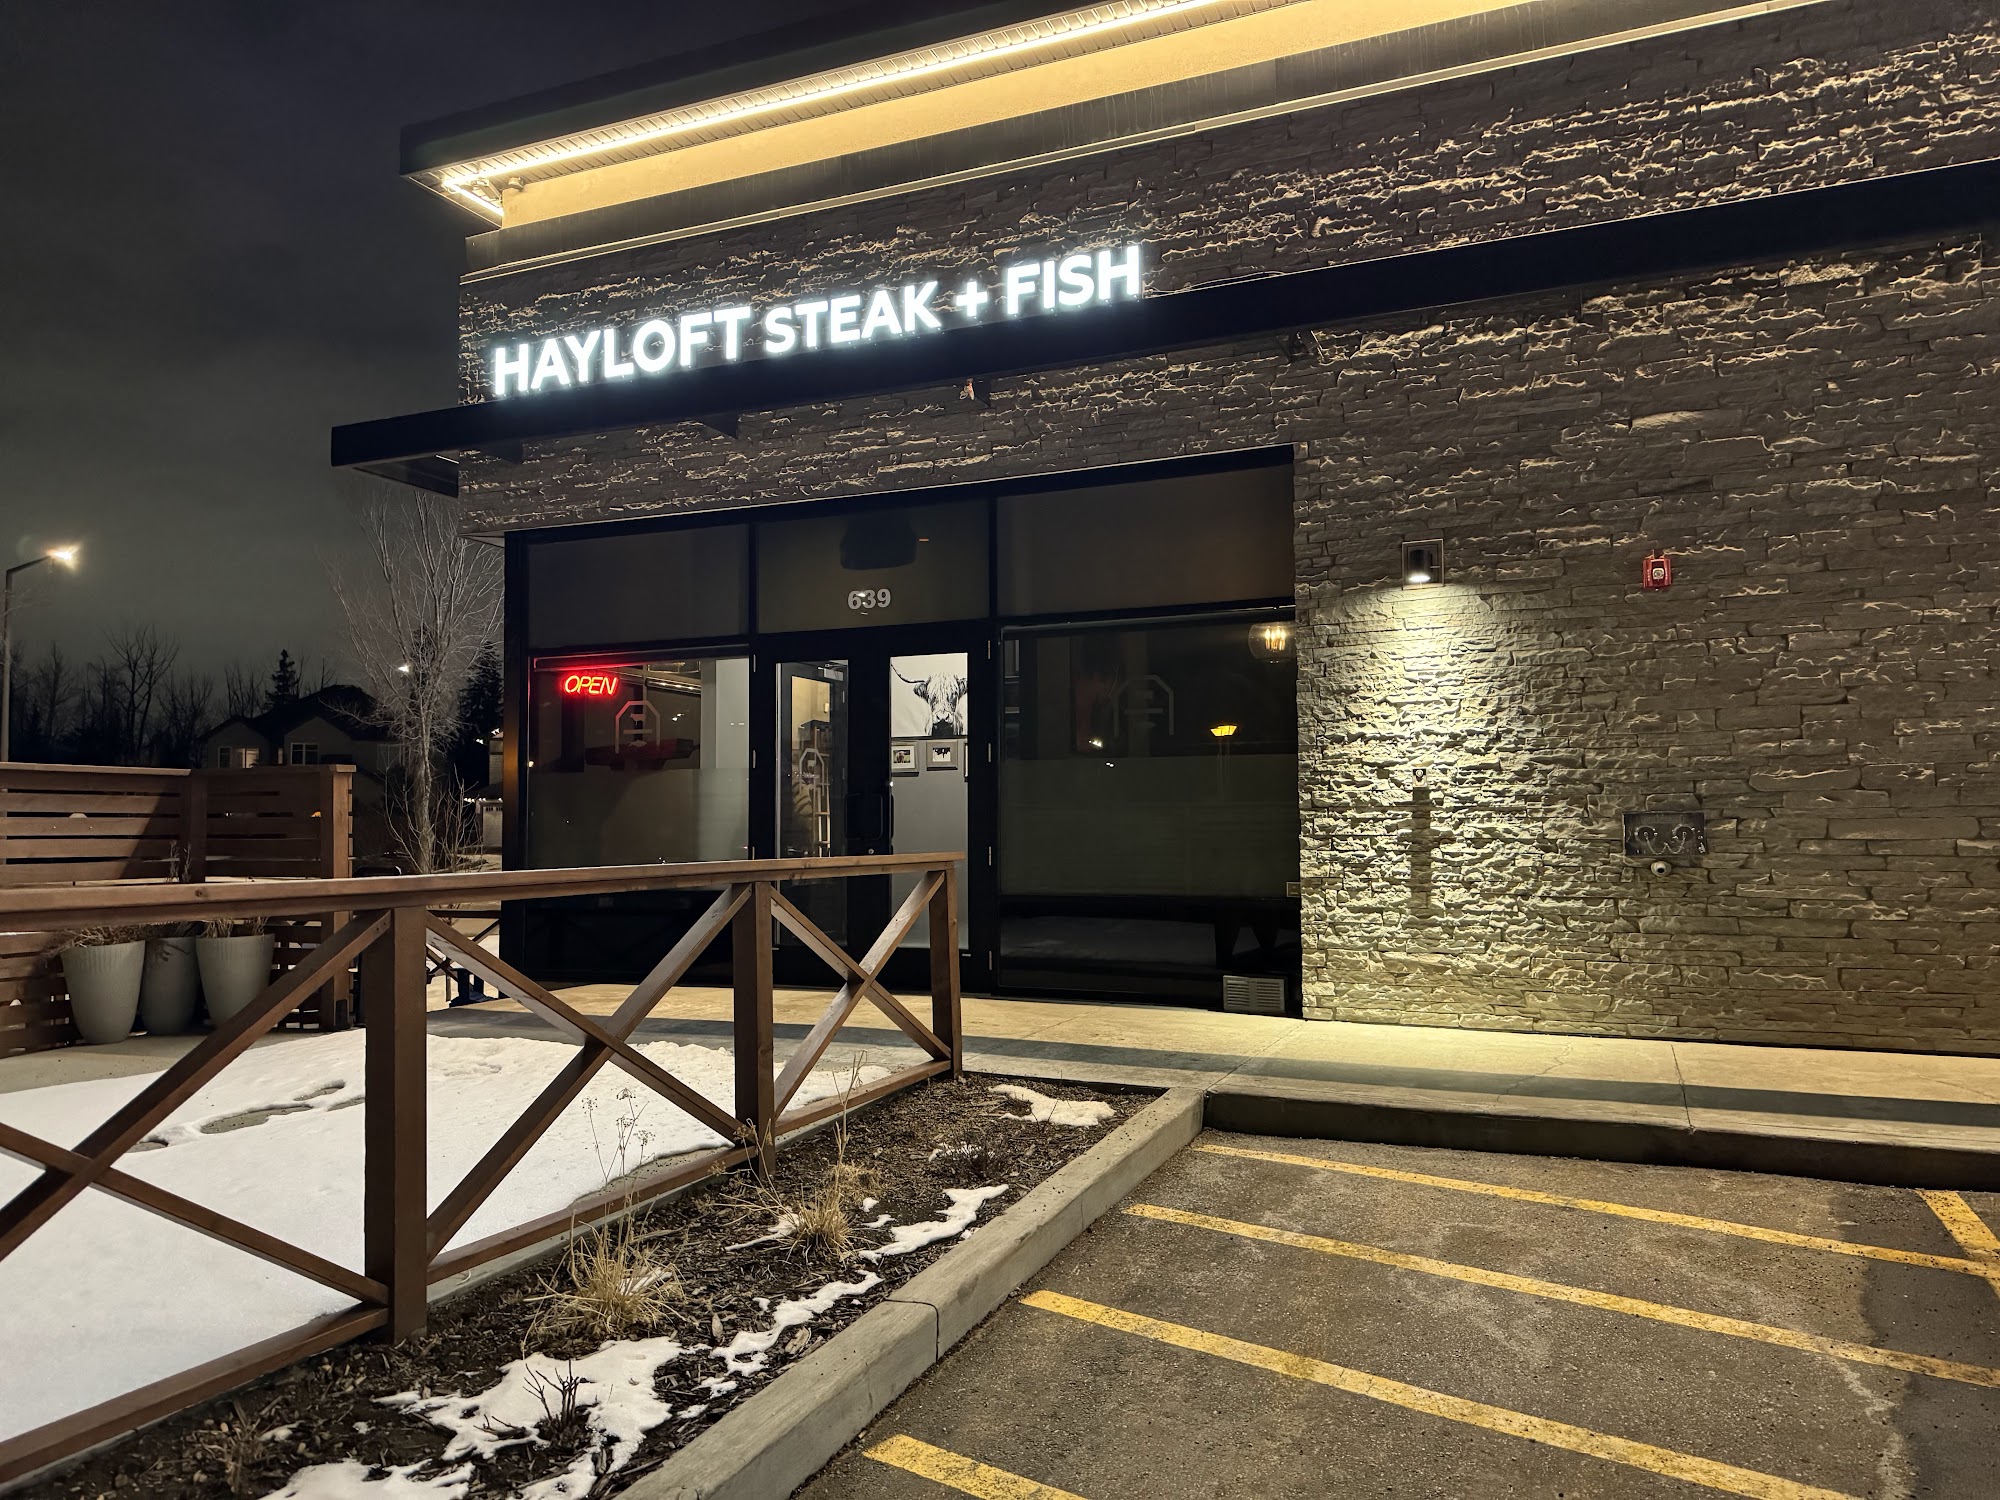 Hayloft Steak + Fish